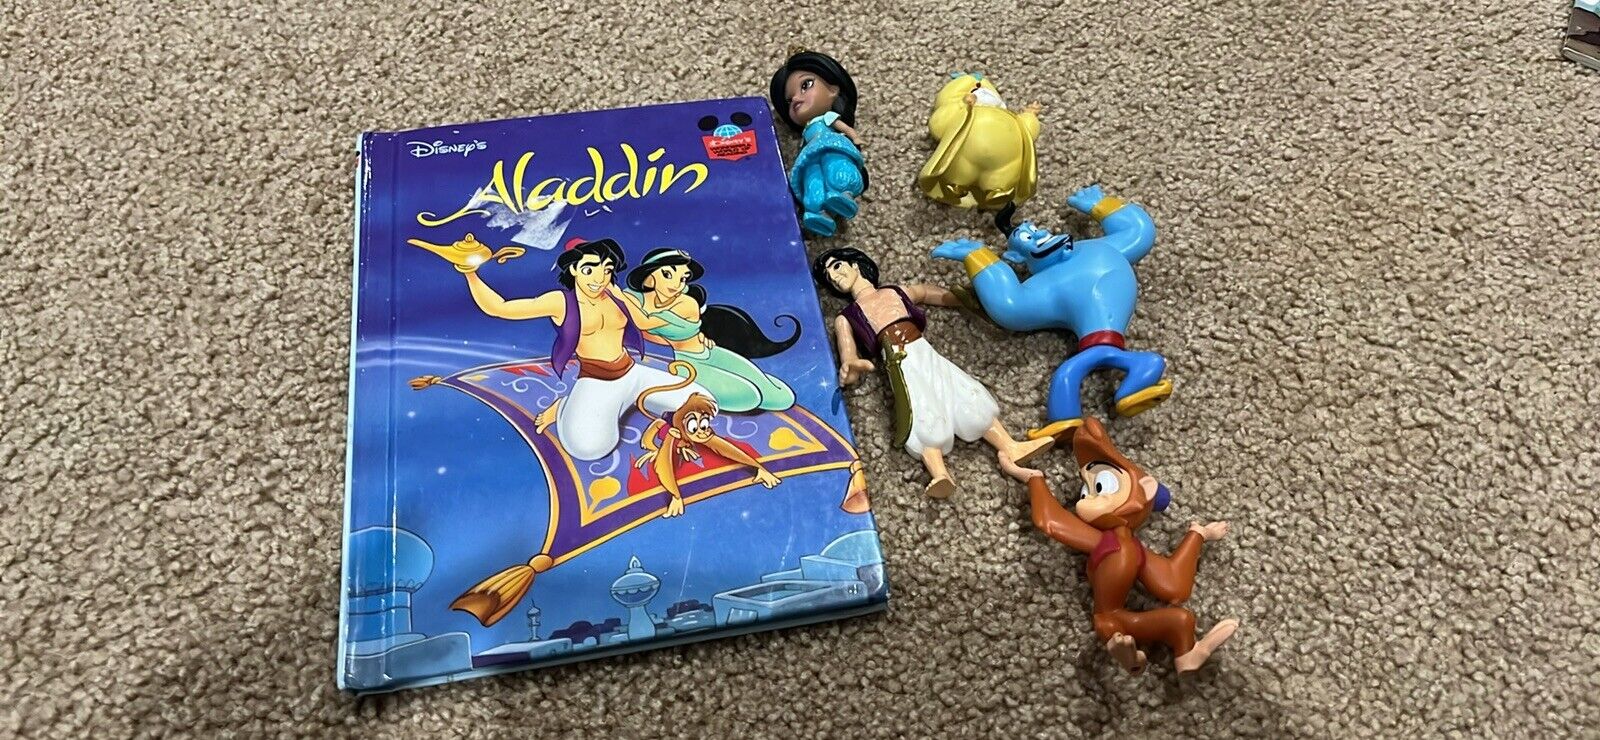 Lot of 5 Disney Aladdin Figurines